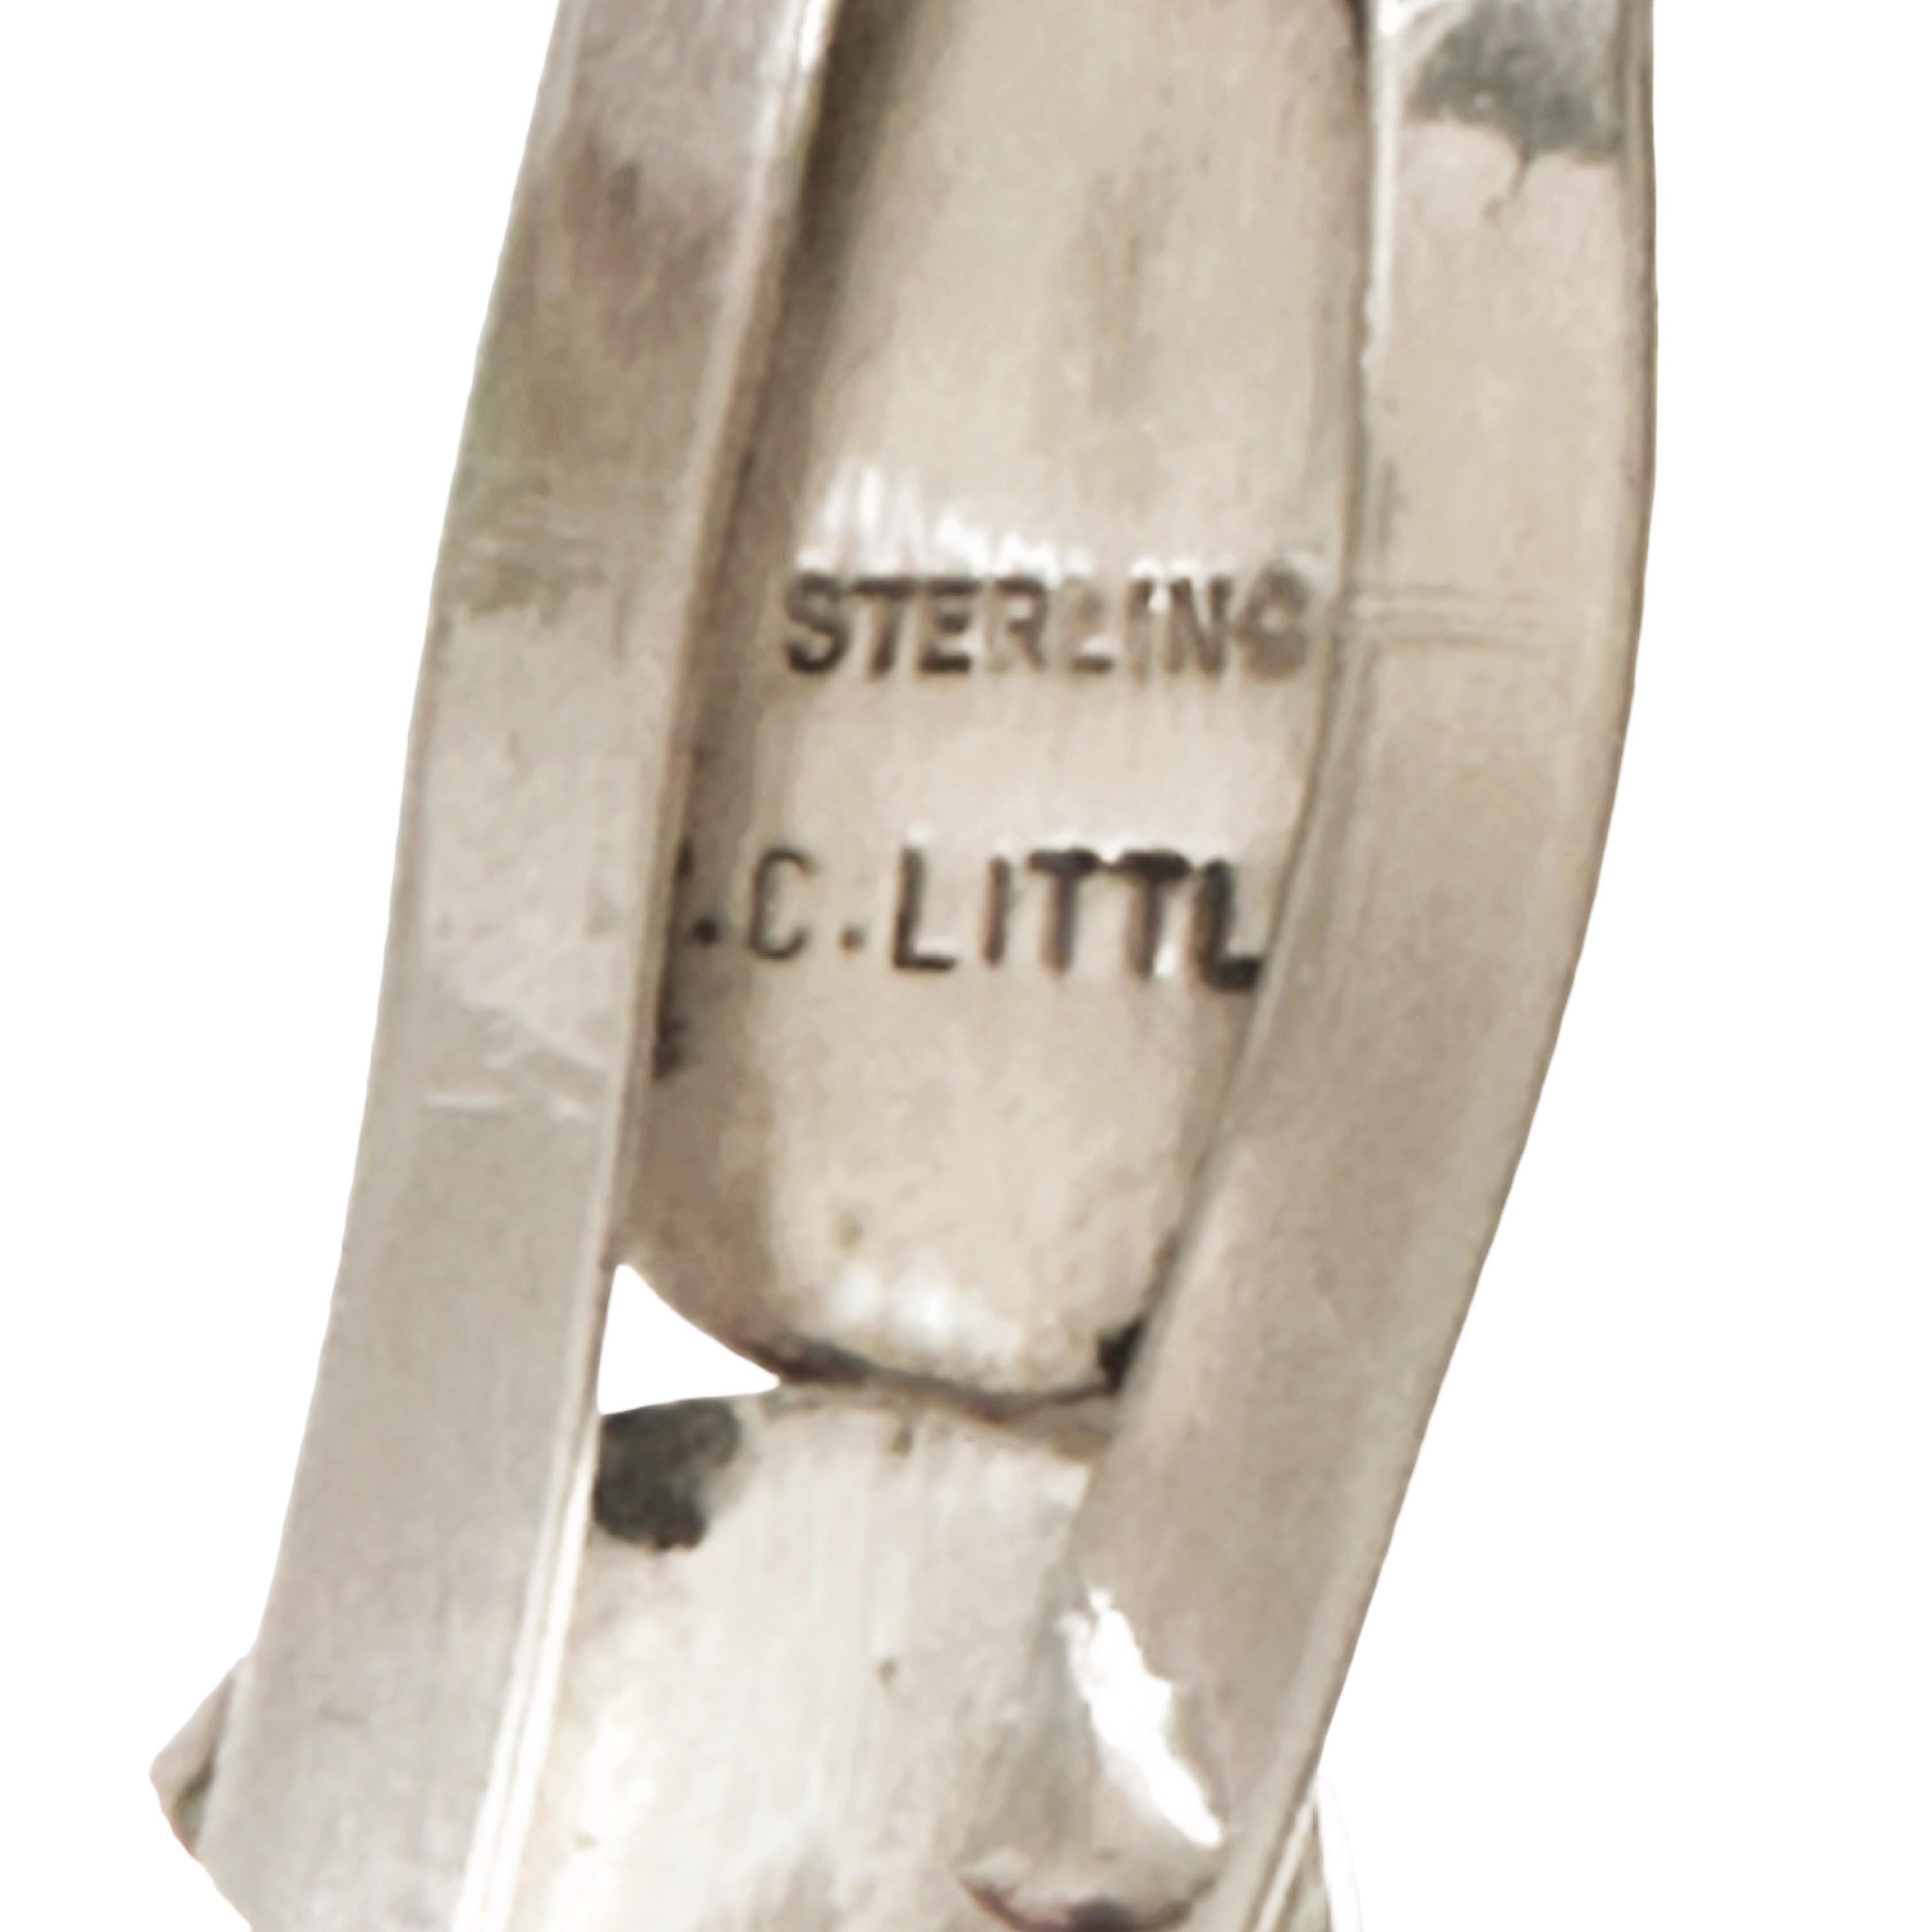 Manschettenarmband aus Sterlingsilber und schwarzem Onyx, gestempelt C. Little (Cabochon)